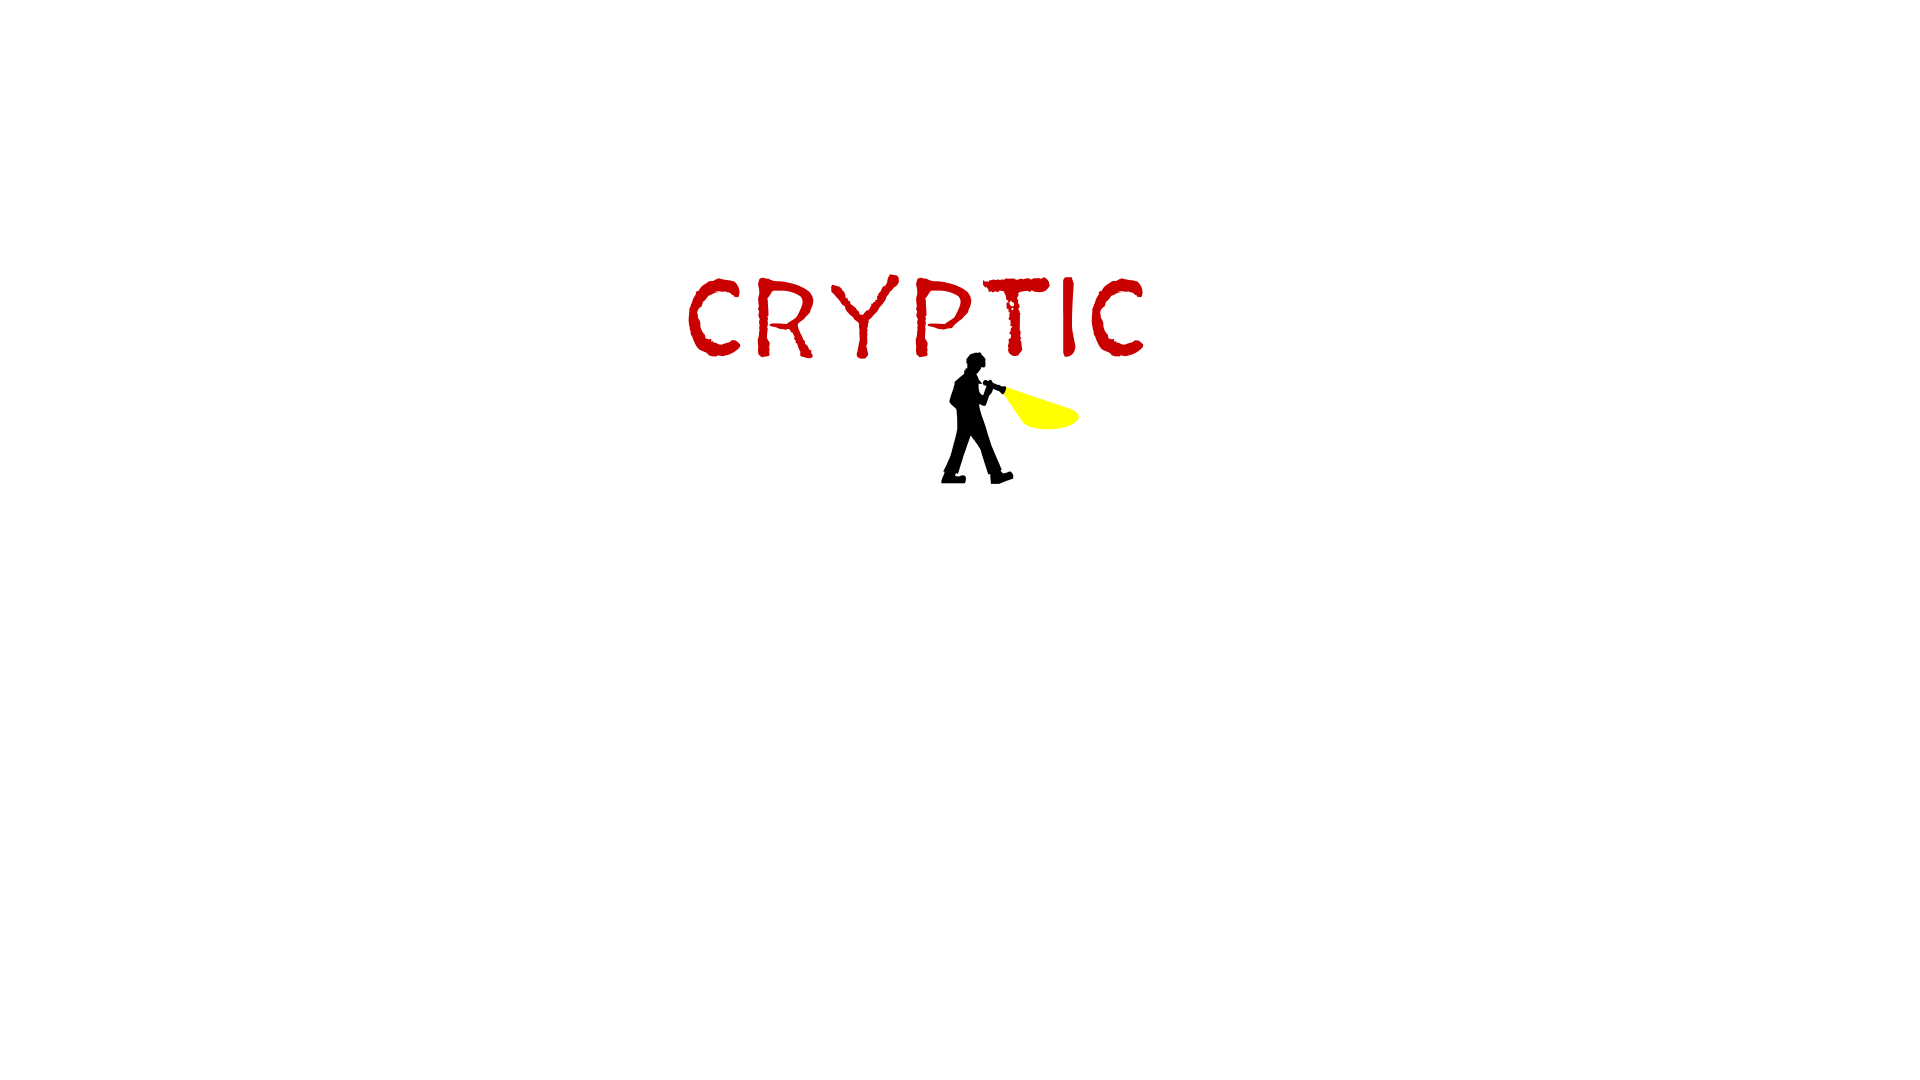 CRYPTIC